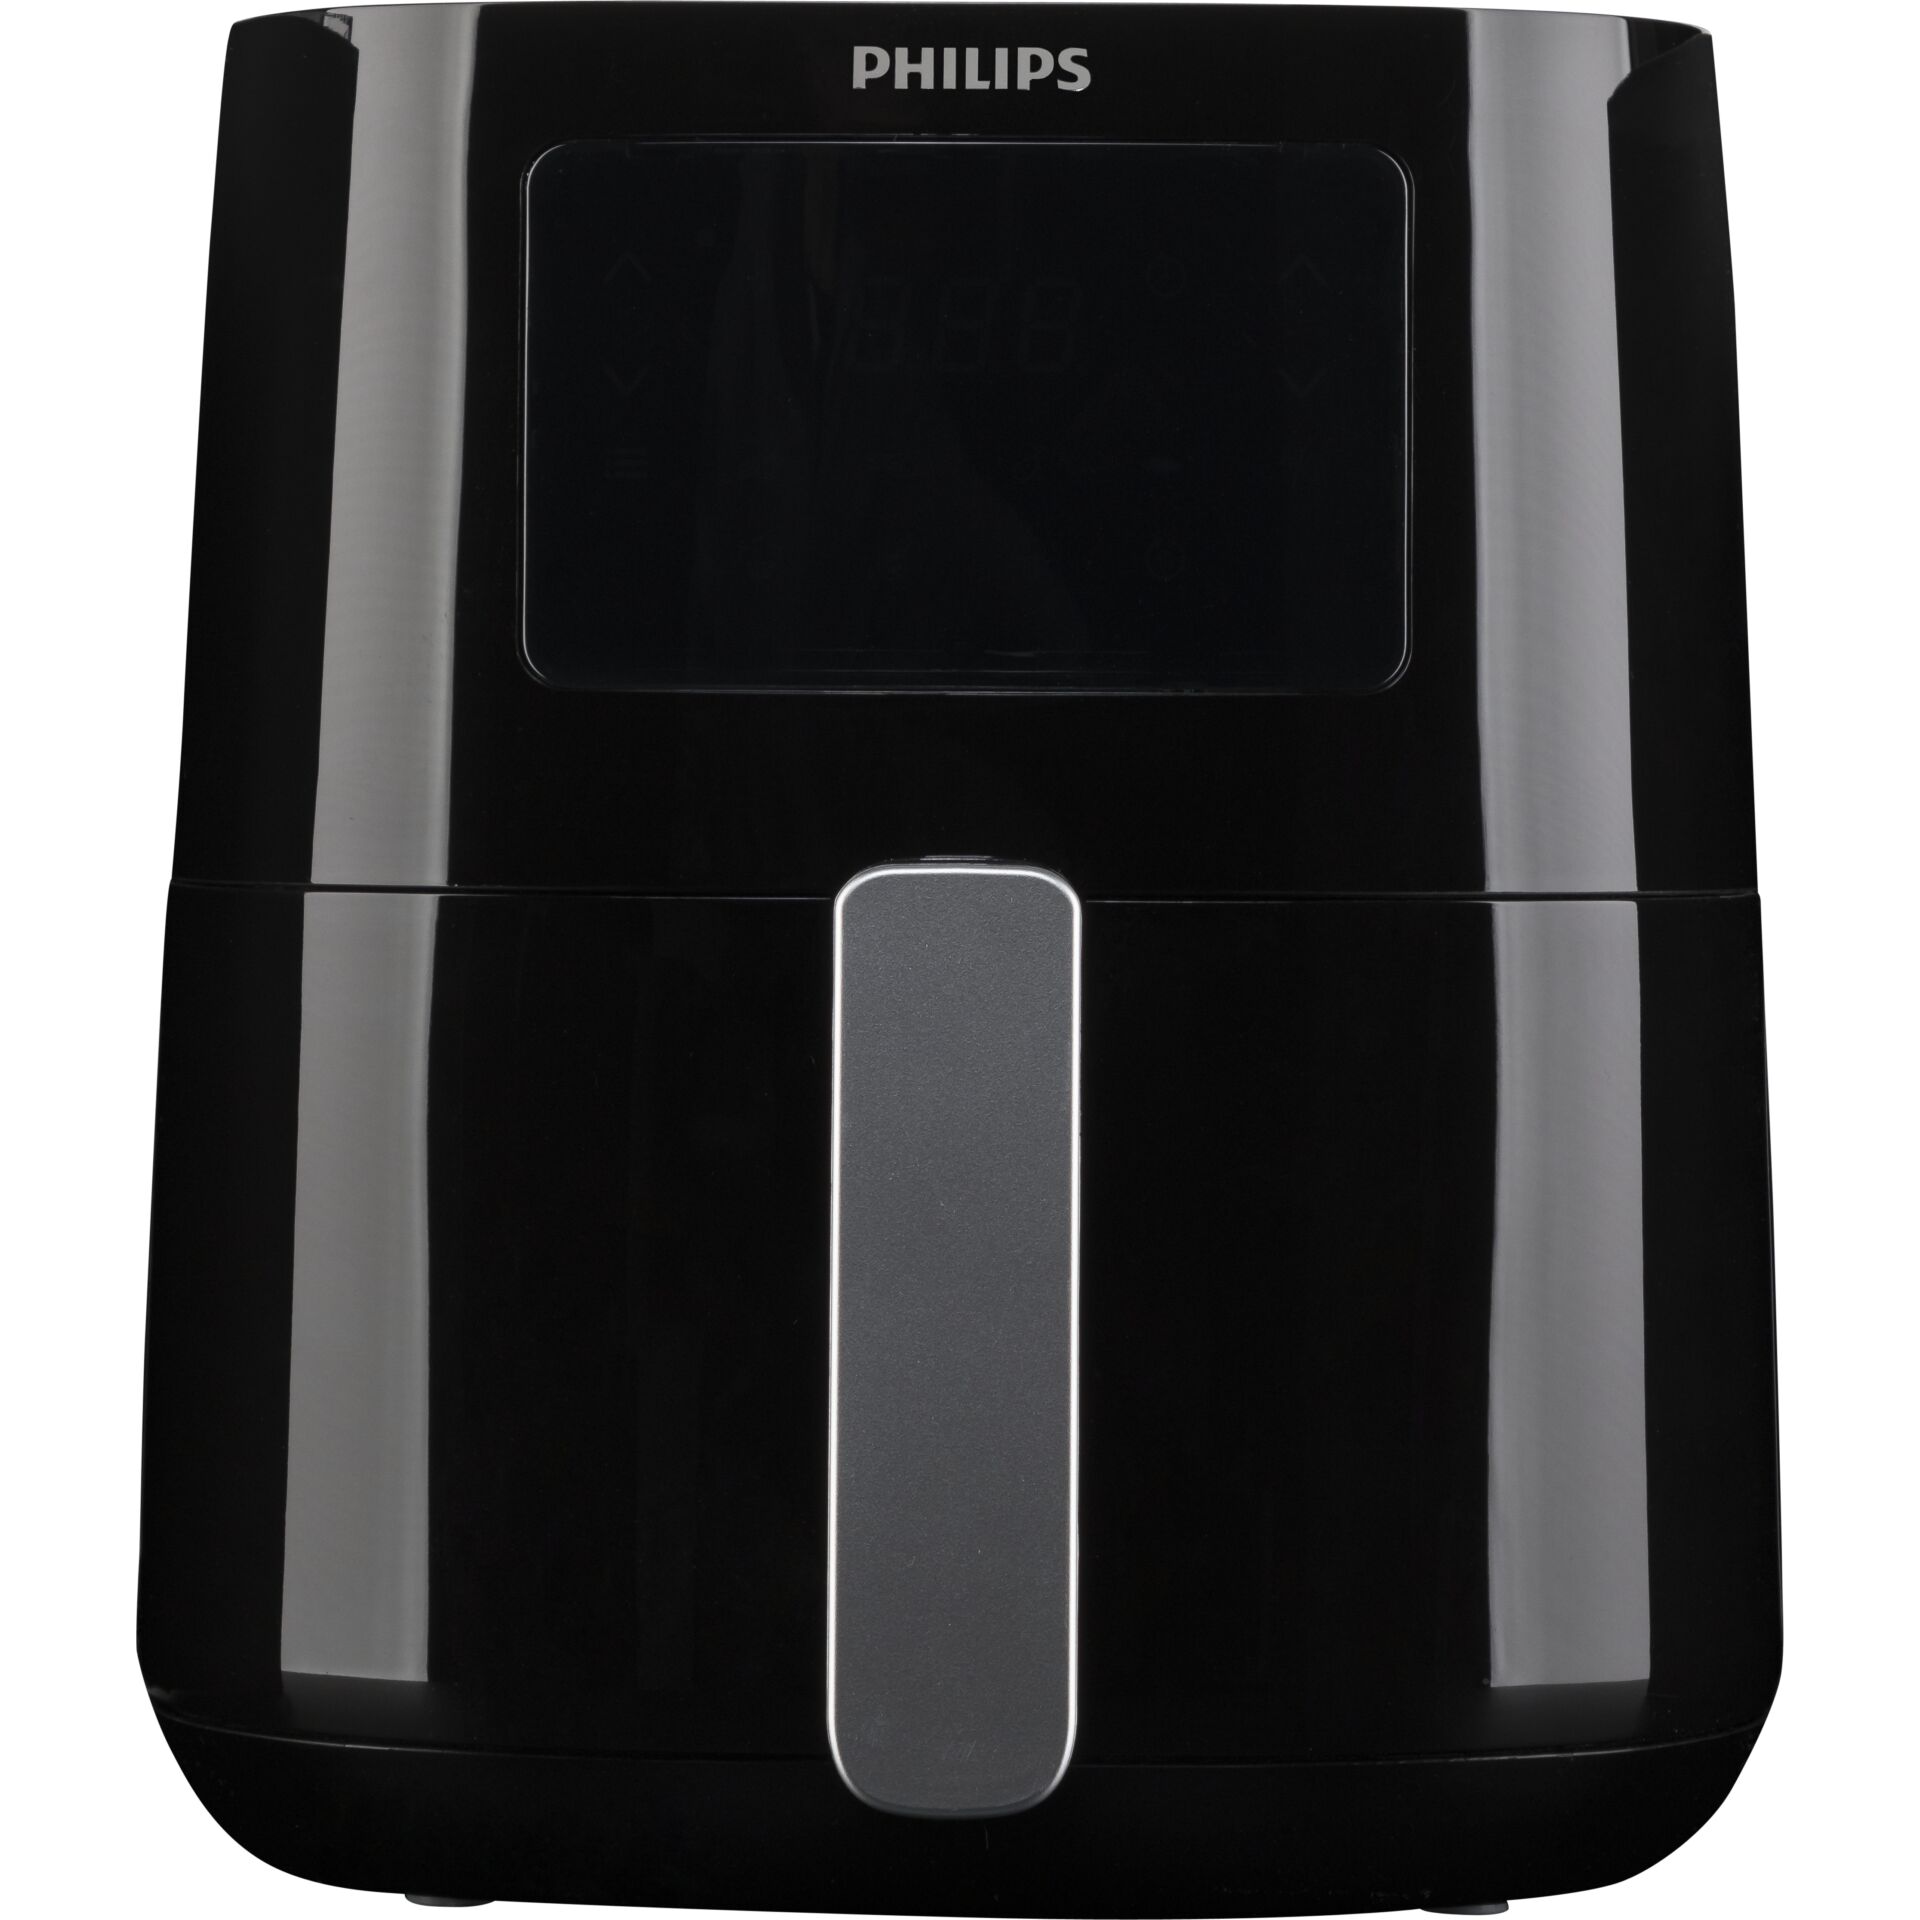 Philips HD 9252/70 Airfryer nero